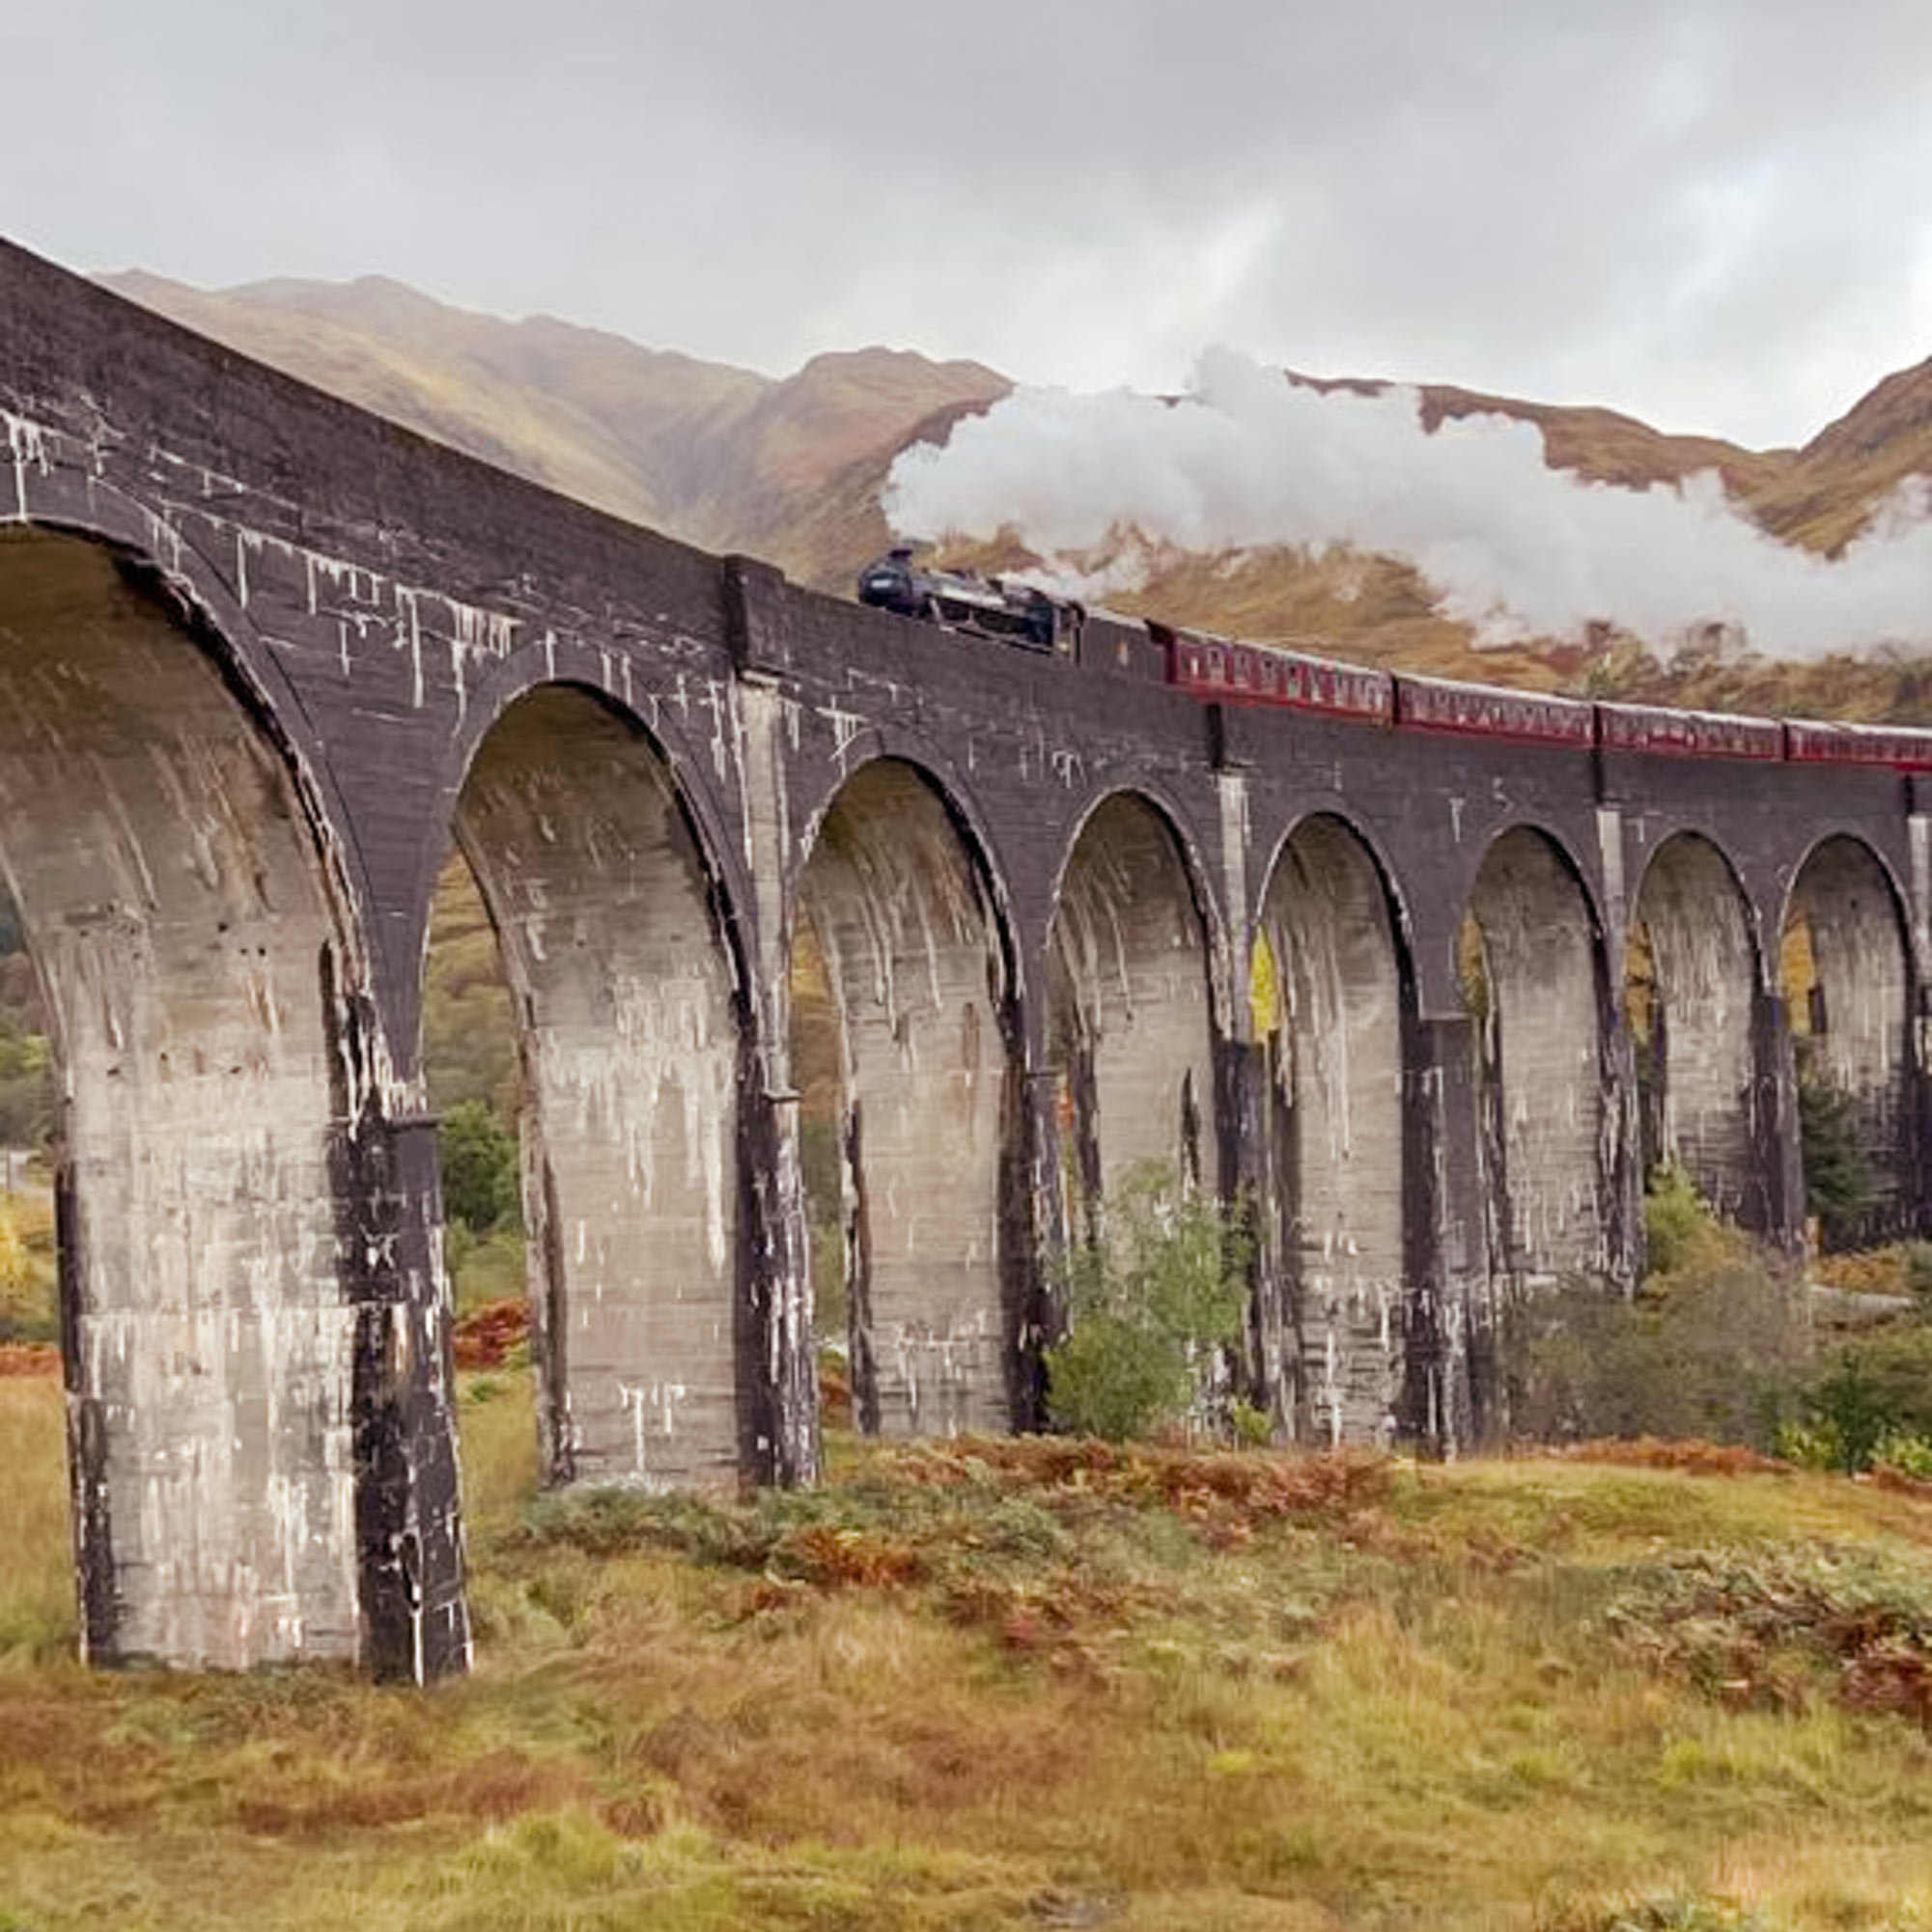 The Harry Potter train crossing Glenfinnan Viaduct